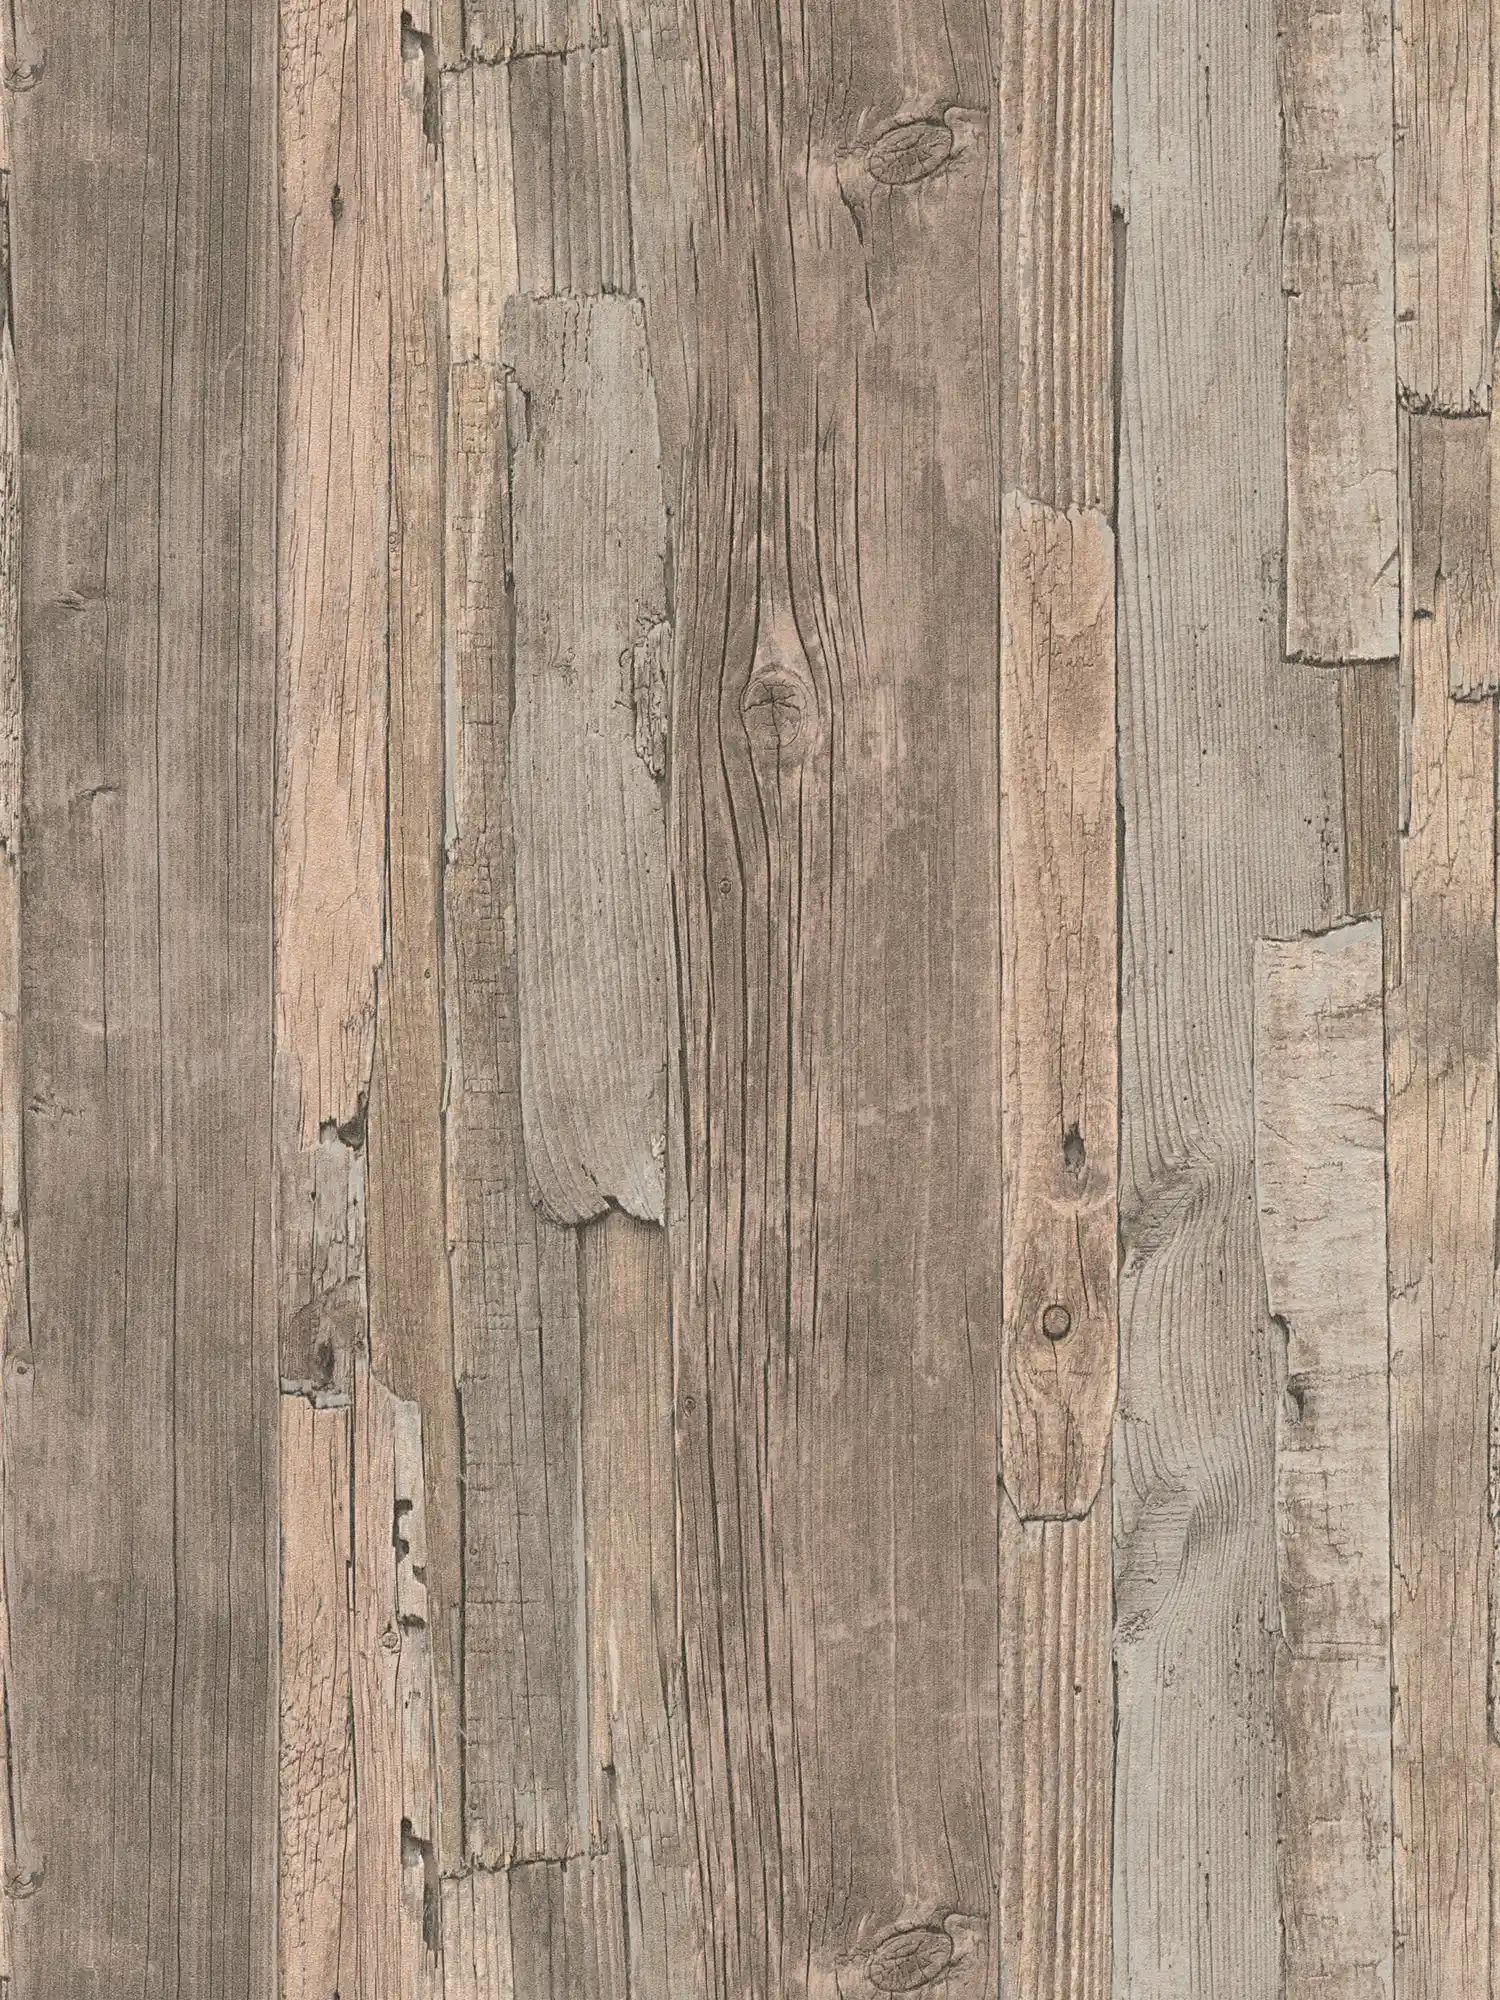 Wallpaper with board pattern, wood in used design - beige, brown
